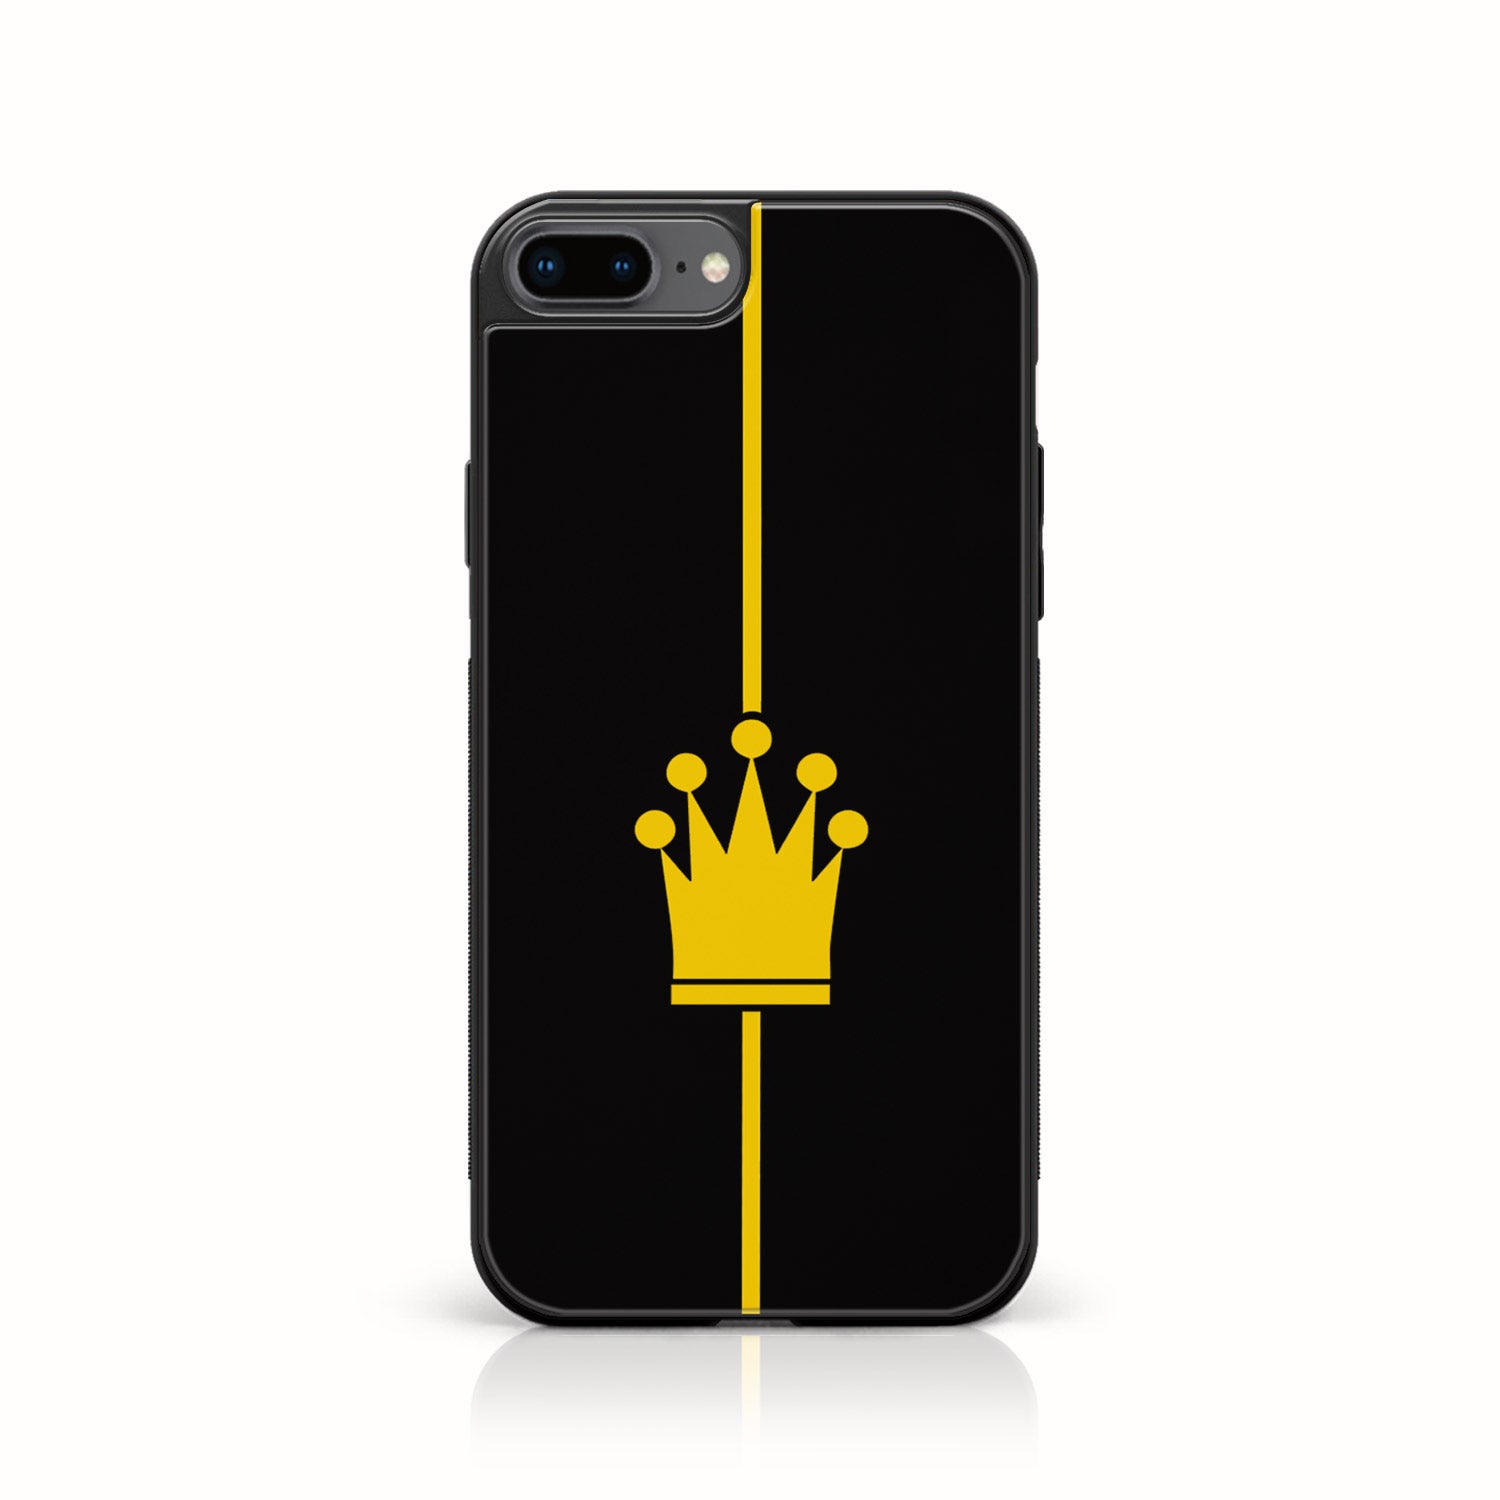 iPhone 7Plus   - King Series V 2.0   Series - Premium Printed Glass soft Bumper shock Proof Case